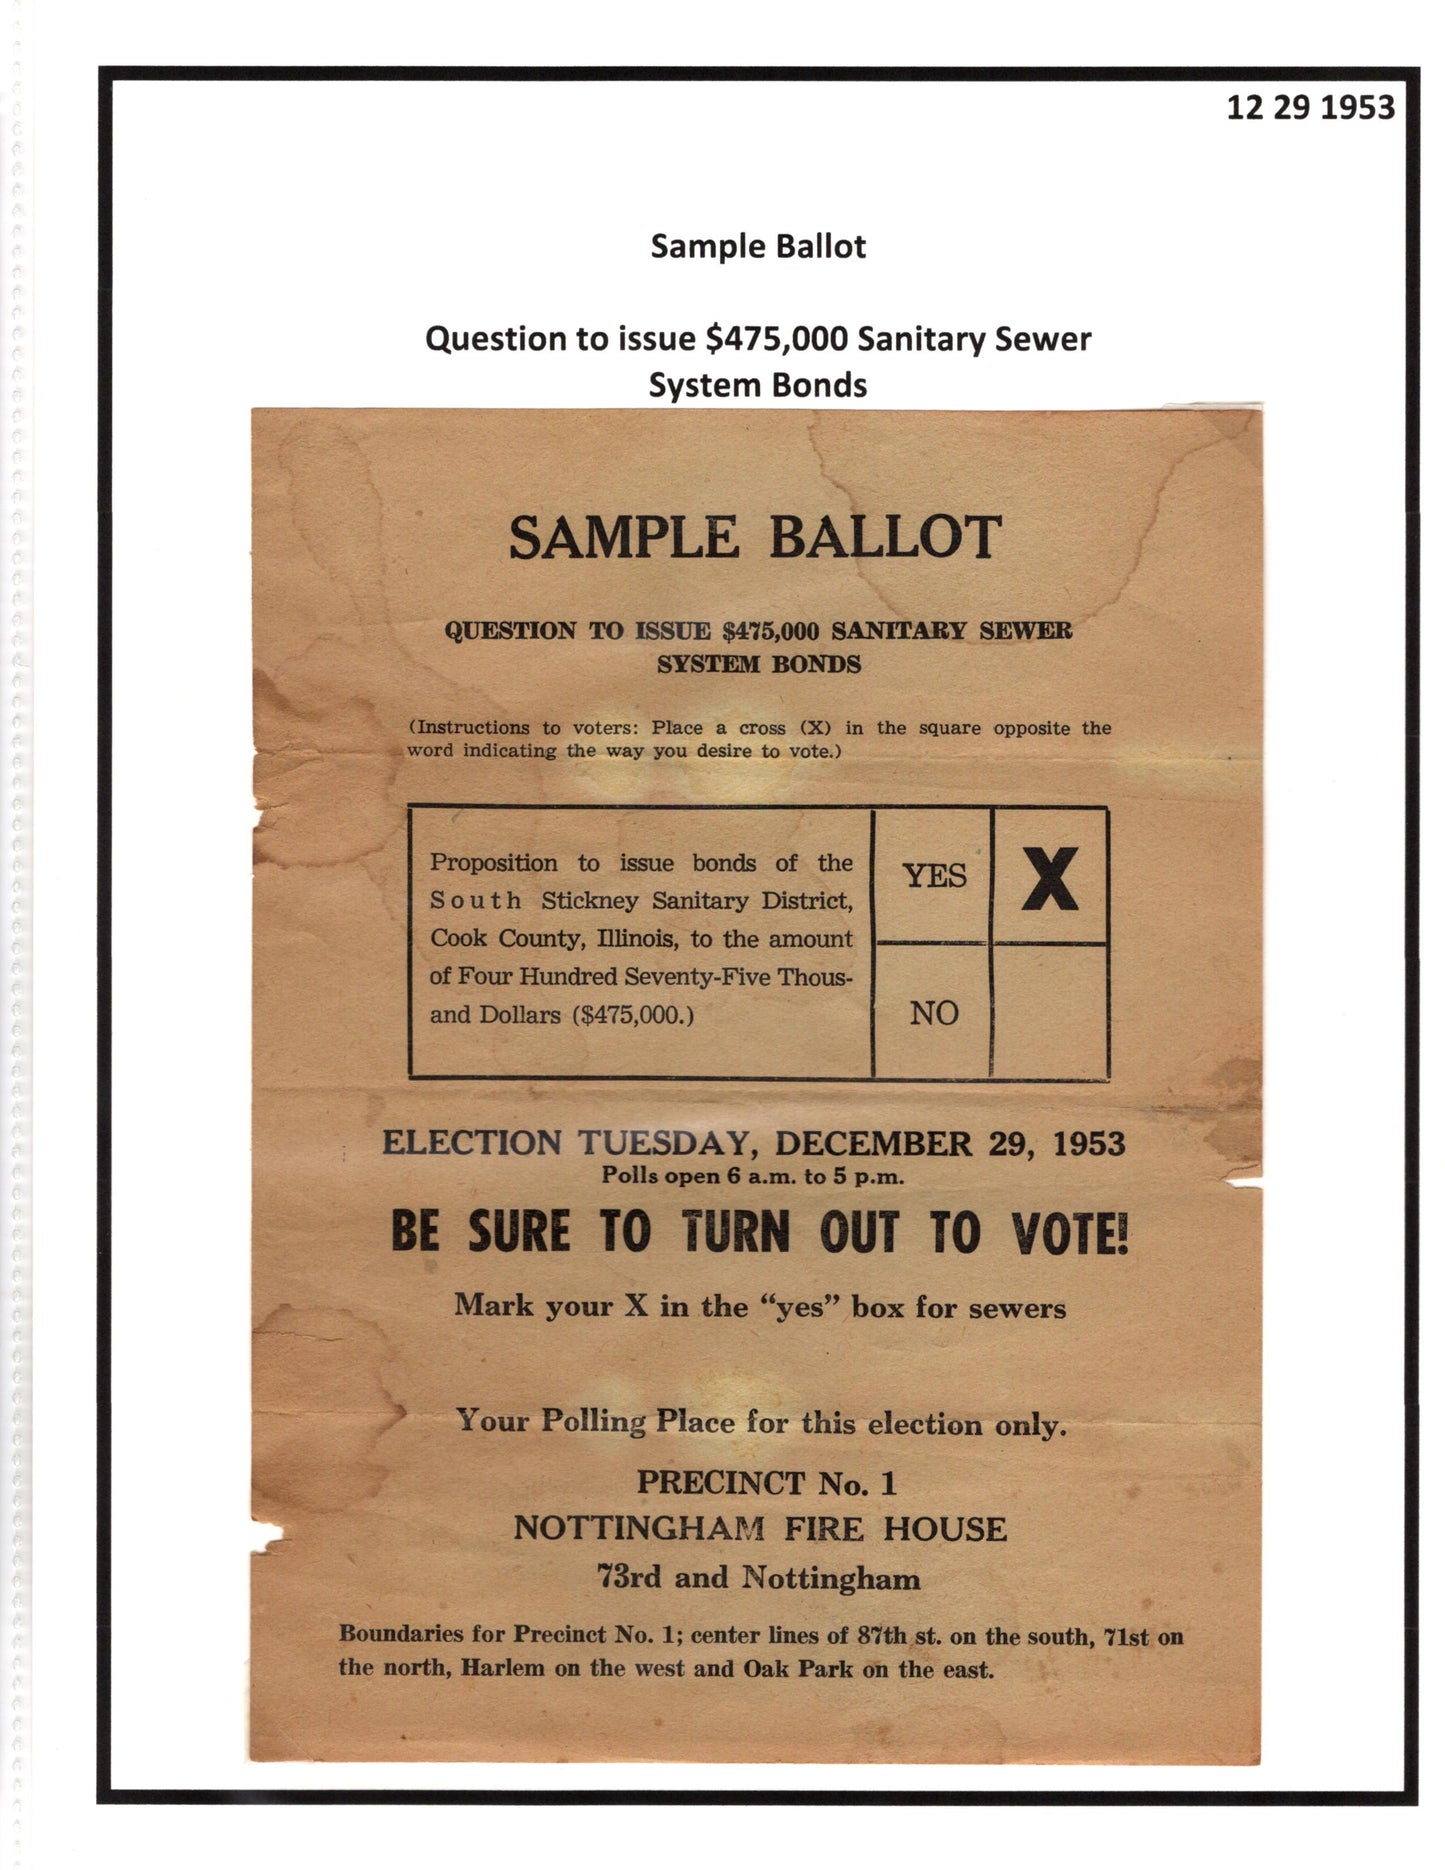 12 29 1953 Cook County Illinois Sample Ballot